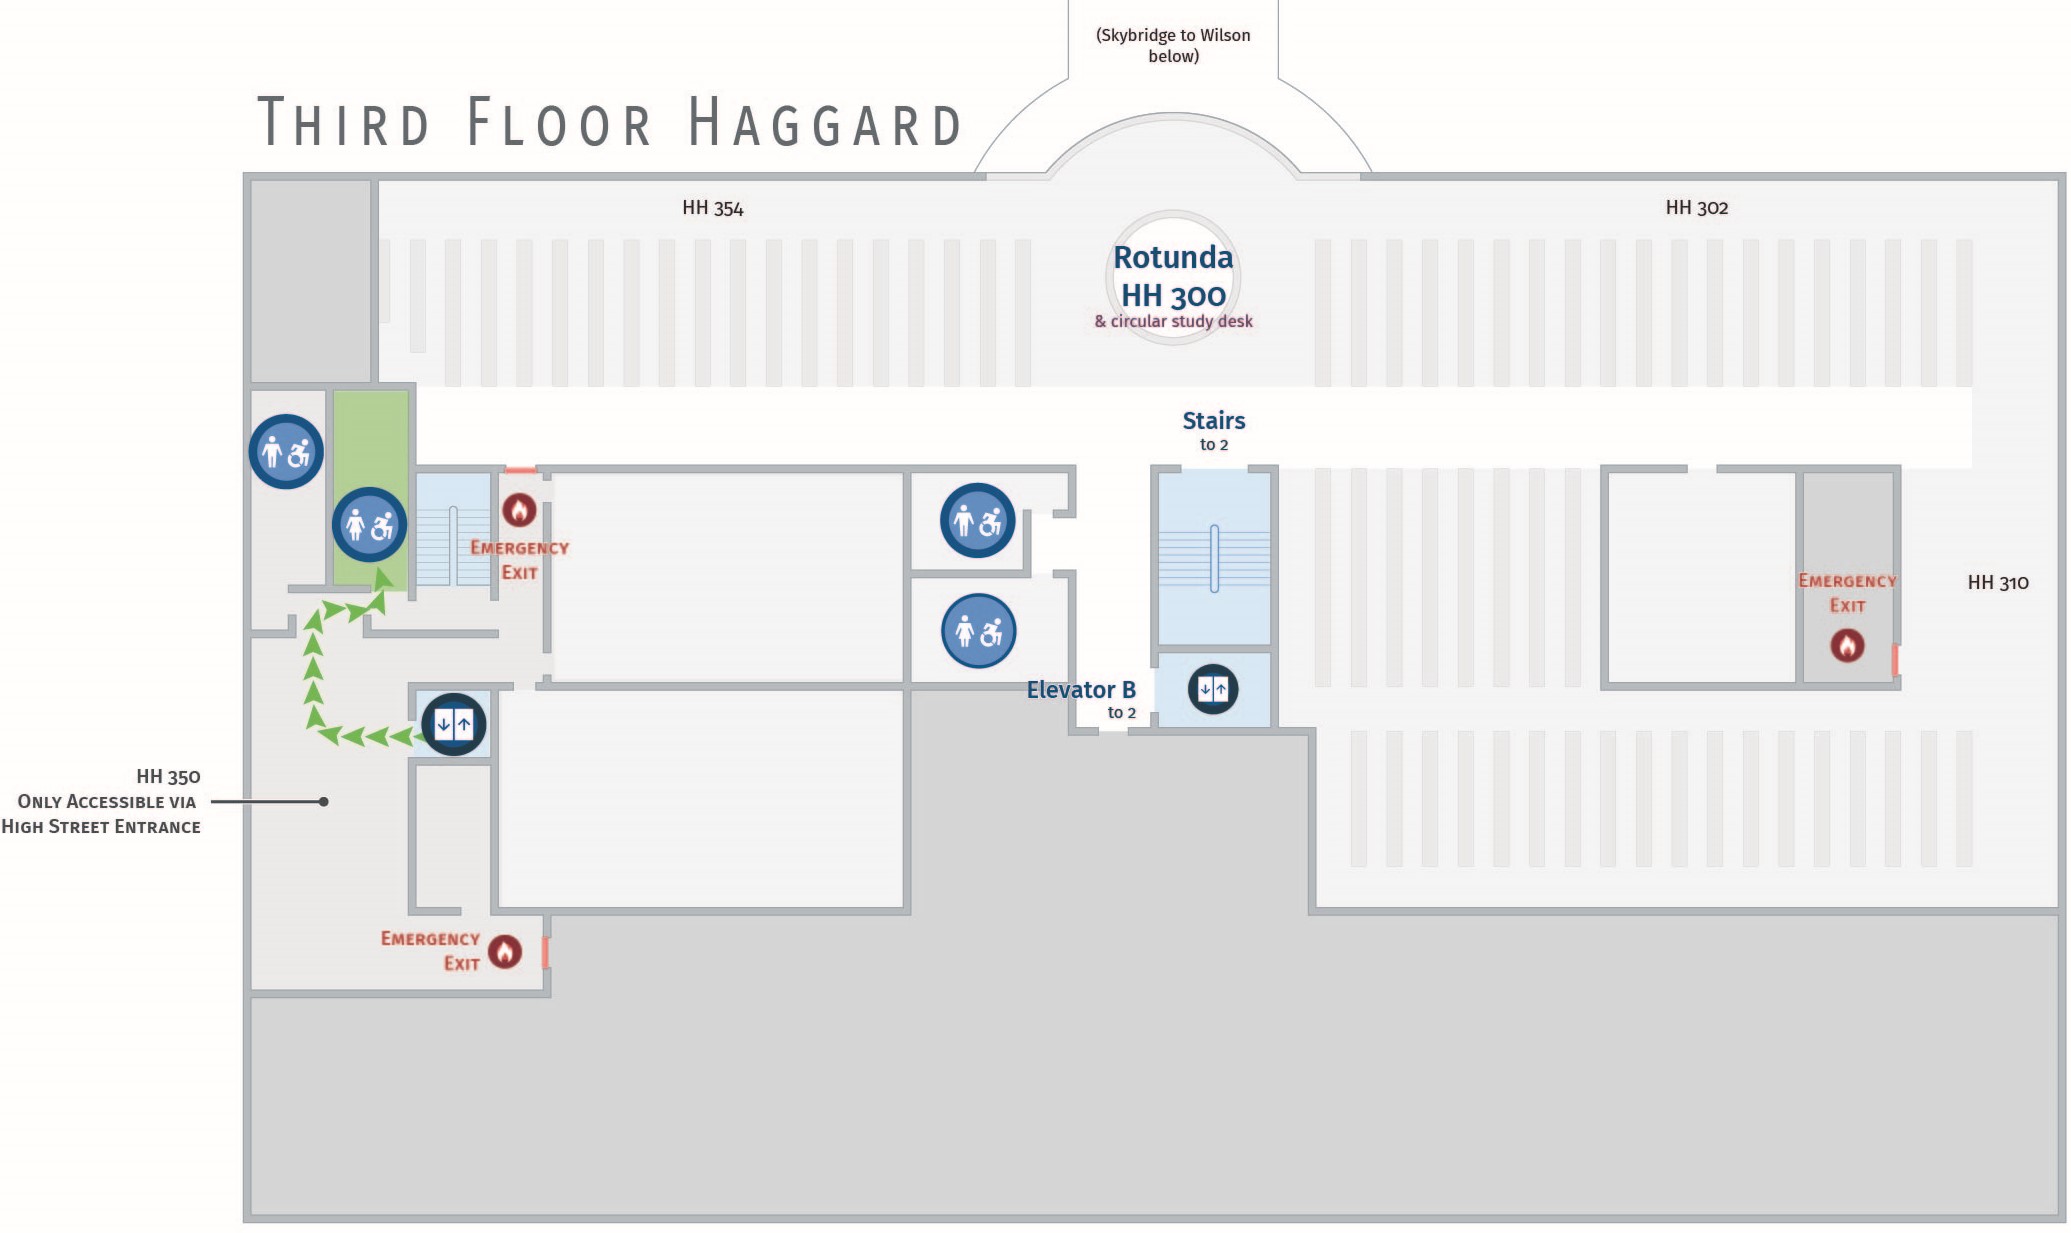 Floor plan, third floor of Haggard with accessible path to women's restroom. Haggard 352.